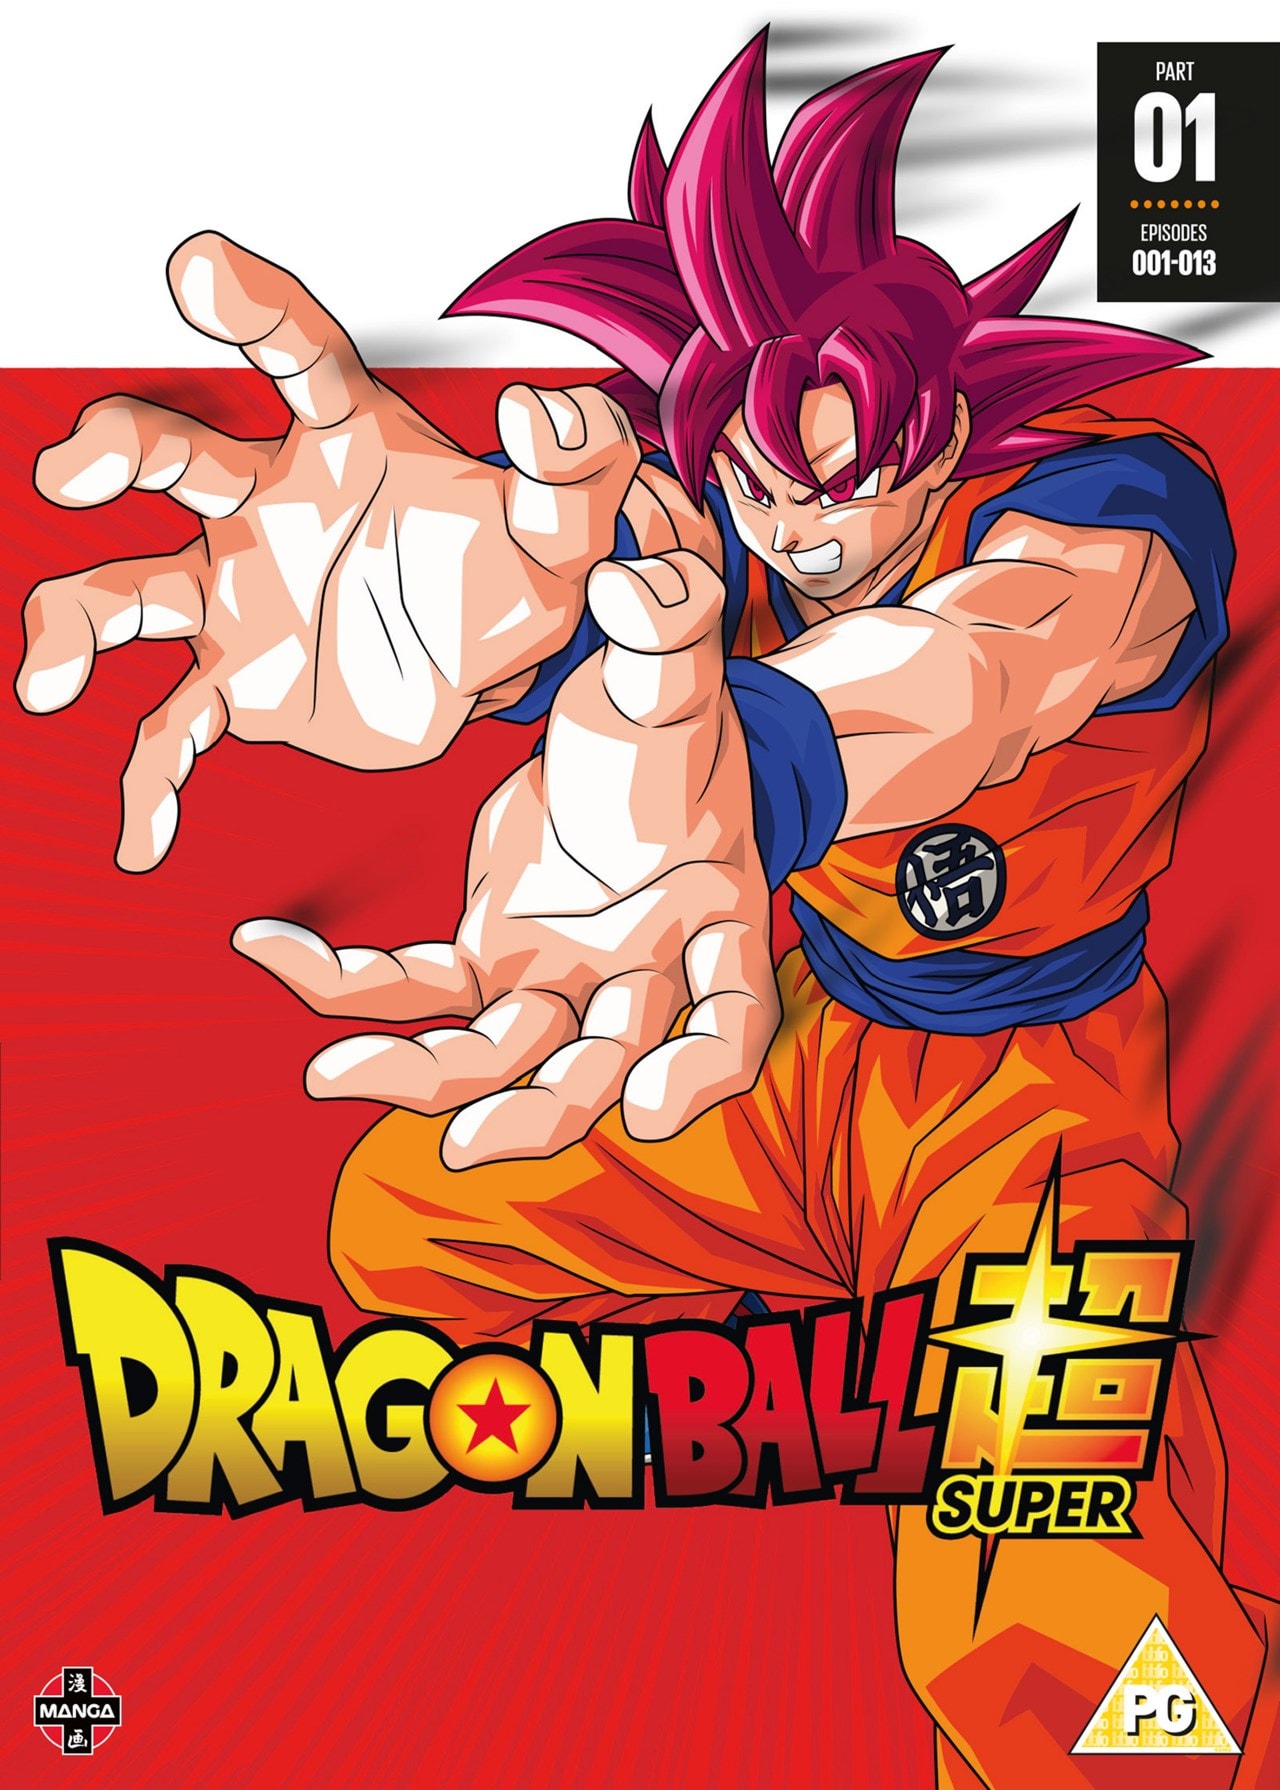 Dragon Ball Super Season 1 Part 1 Dvd Free Shipping Over £20